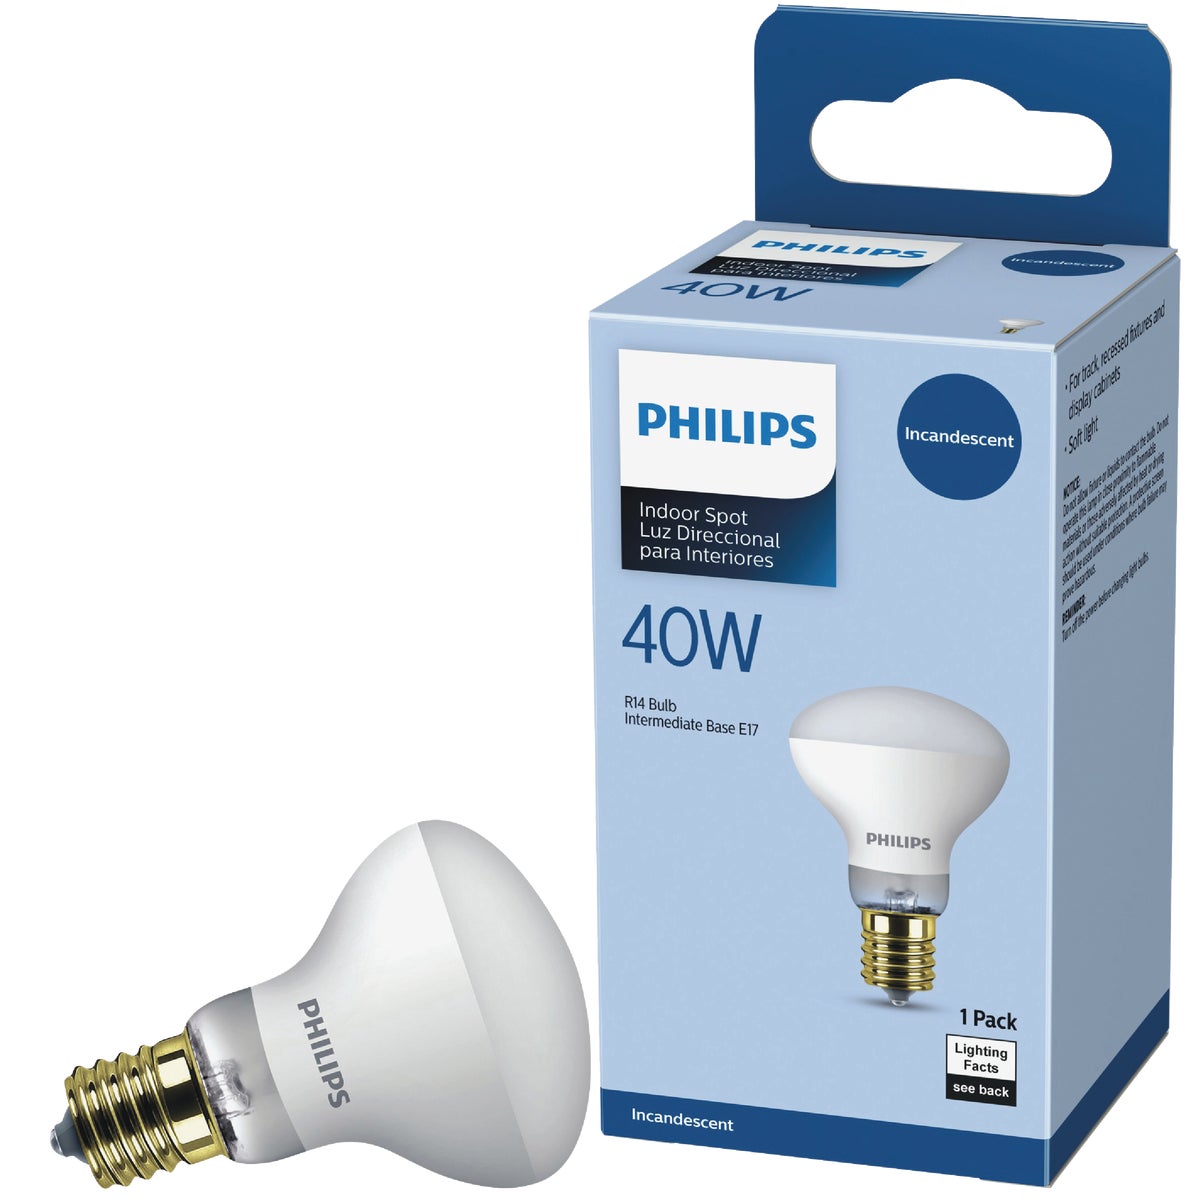 Philips 40W Frosted Intermediate R14 Indoor Incandescent Mini Spotlight Light Bulb